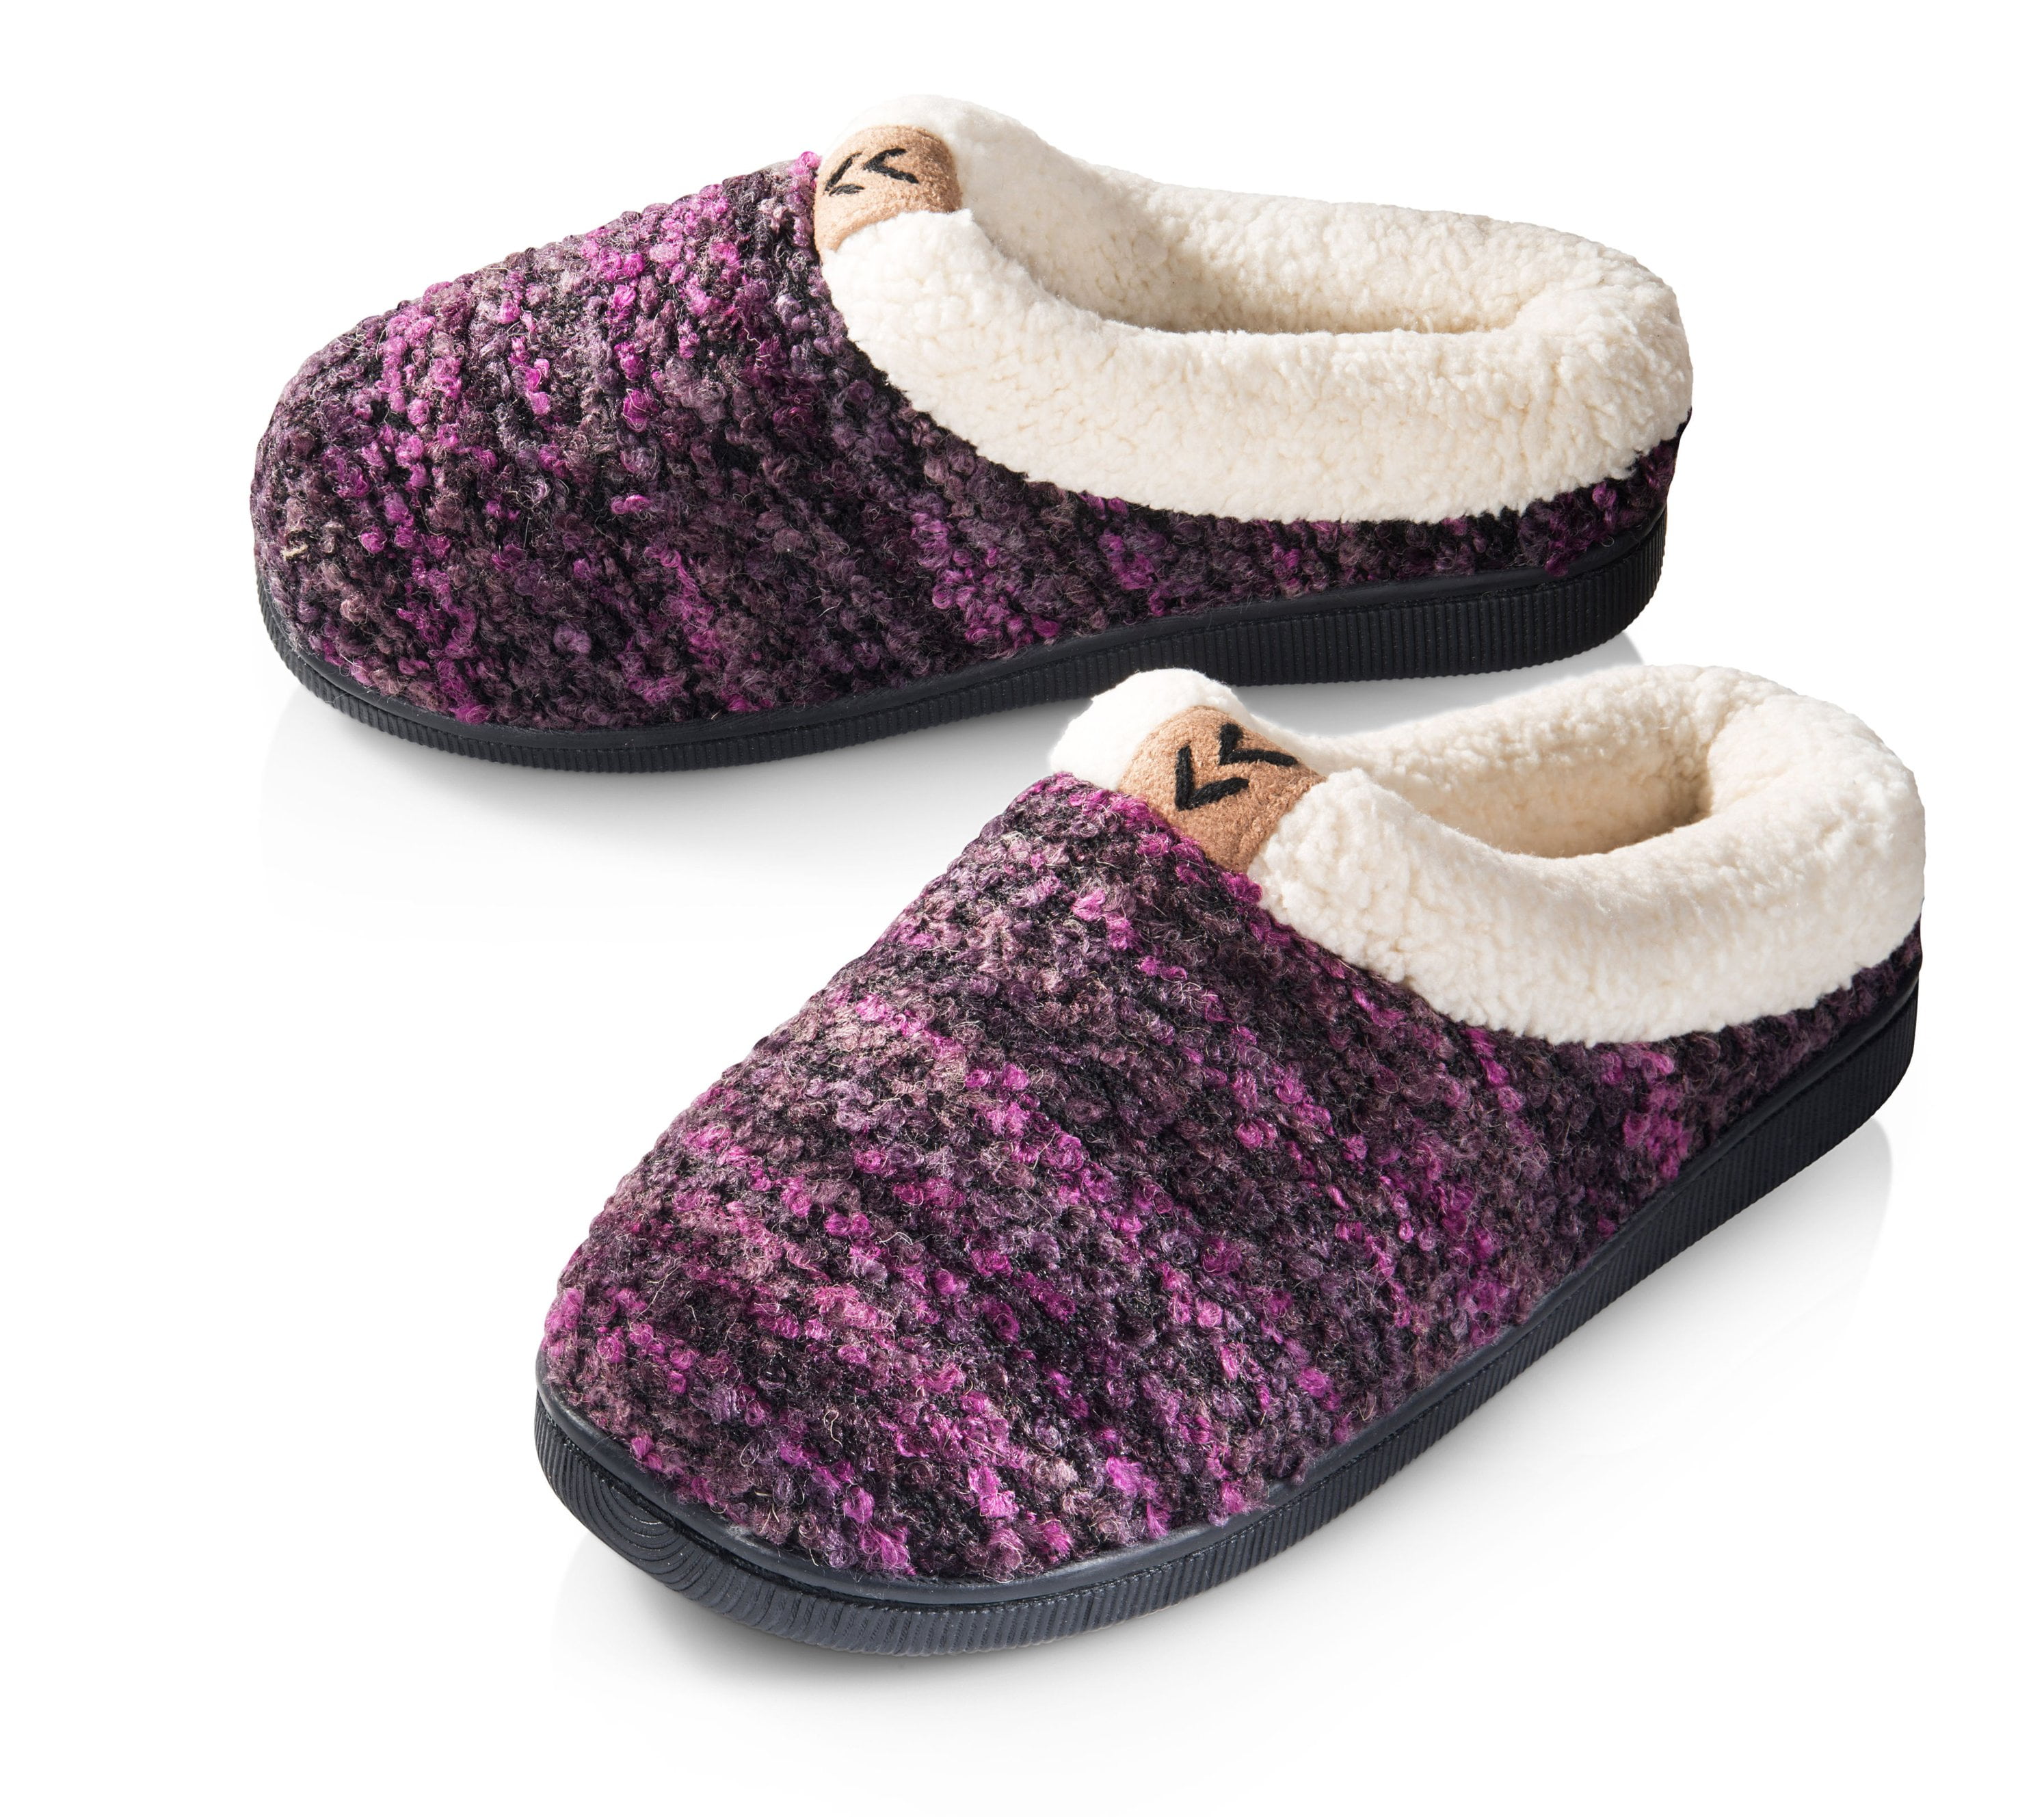 Pupeez - Pupeez Girls Knitted Winter Slippers with Fleece Inside -kid sizes  11 to 5 -style #9368 - Walmart.com - Walmart.com